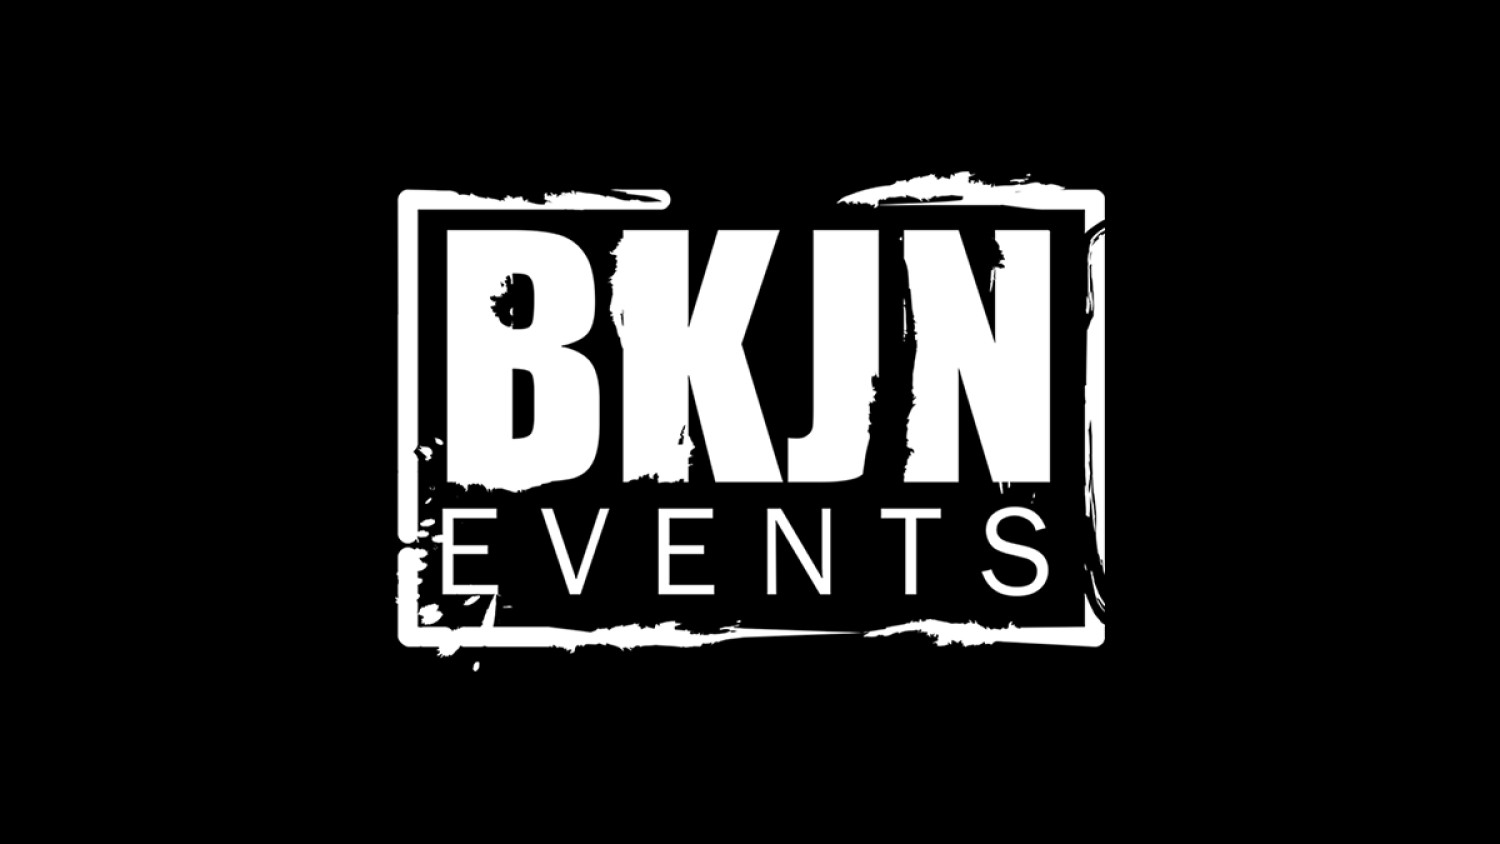 BKJN Events